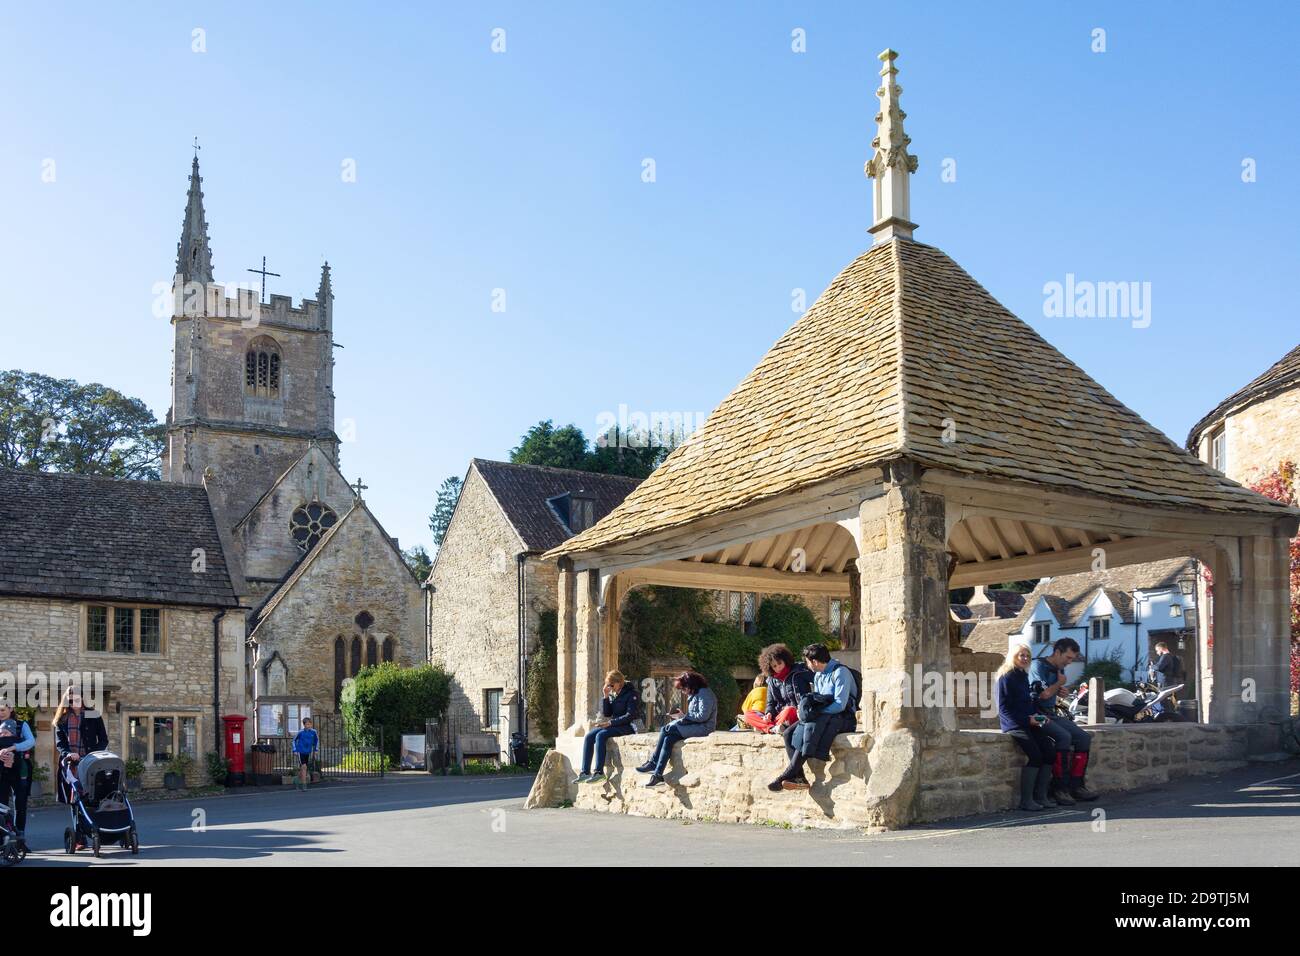 Market Cross et St Andrew's Church, Market Square, Castle Combe, Wiltshire, Angleterre, Royaume-Uni Banque D'Images